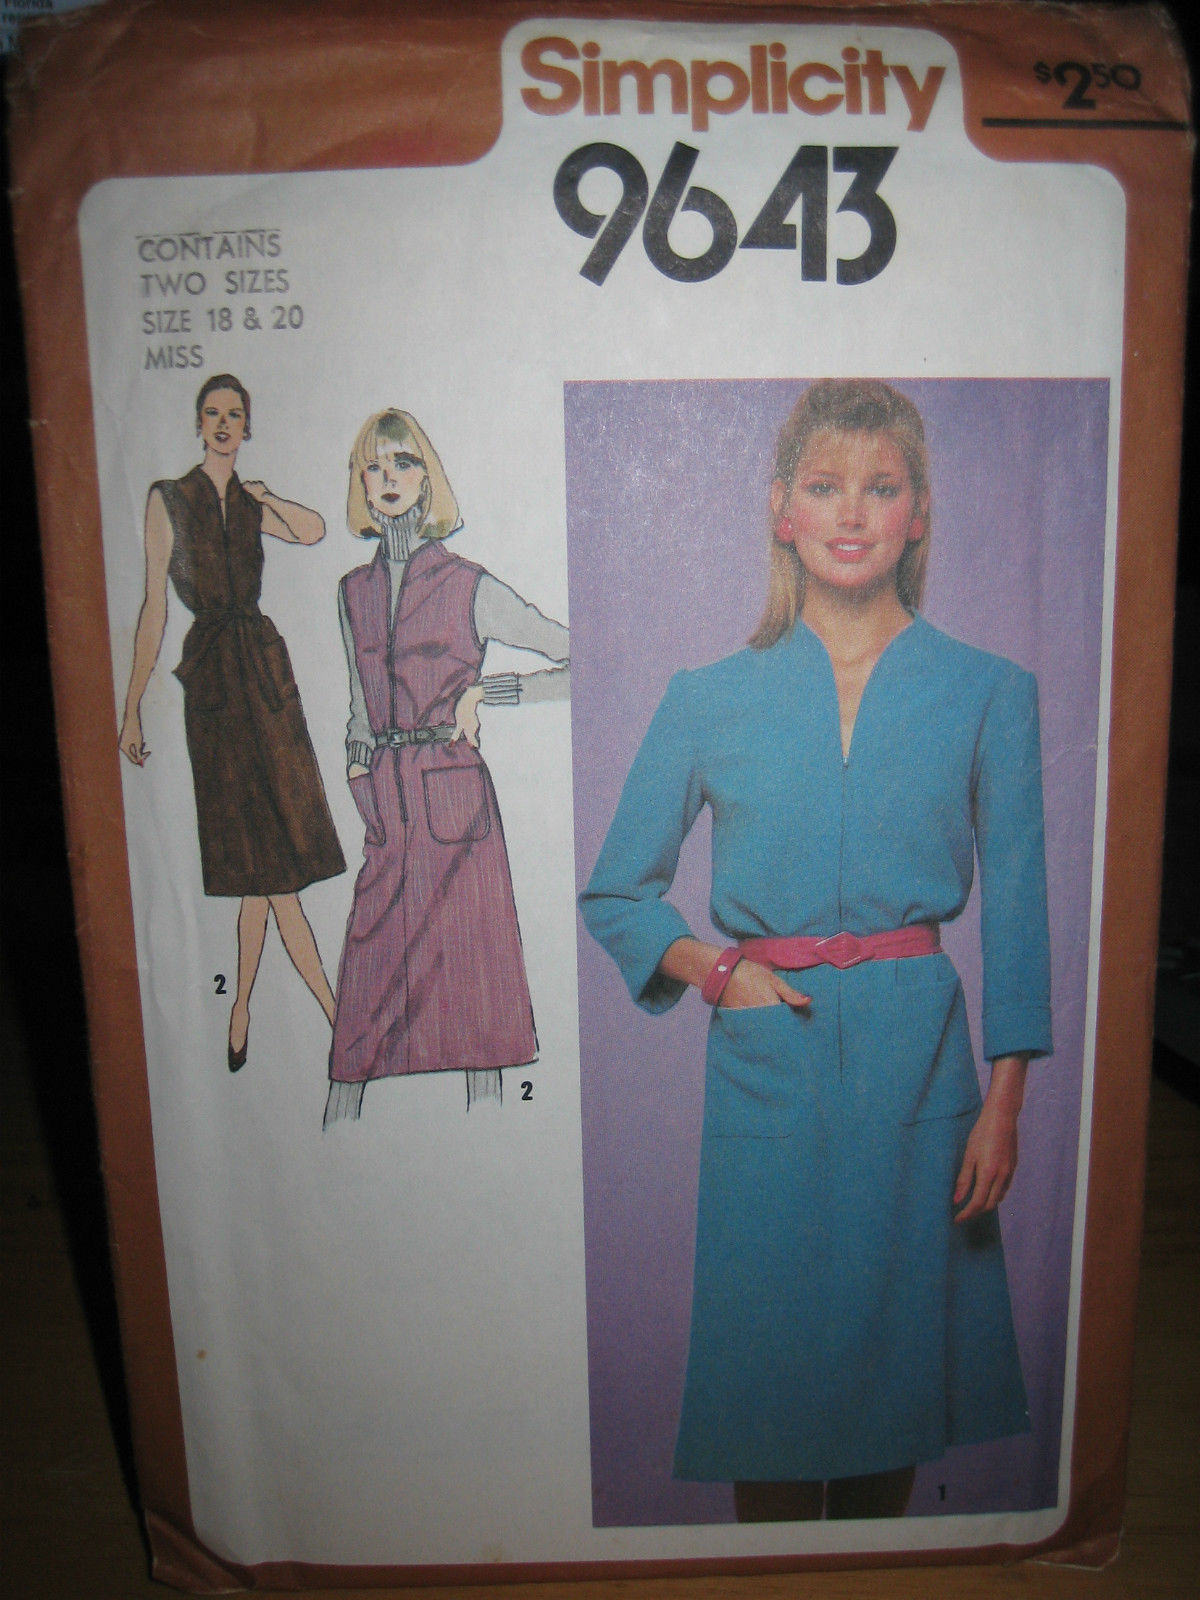 Primary image for Vintage Simplicity 9643 Misses Slim Fitting Jumper or Dress Pattern-Size 18 & 20